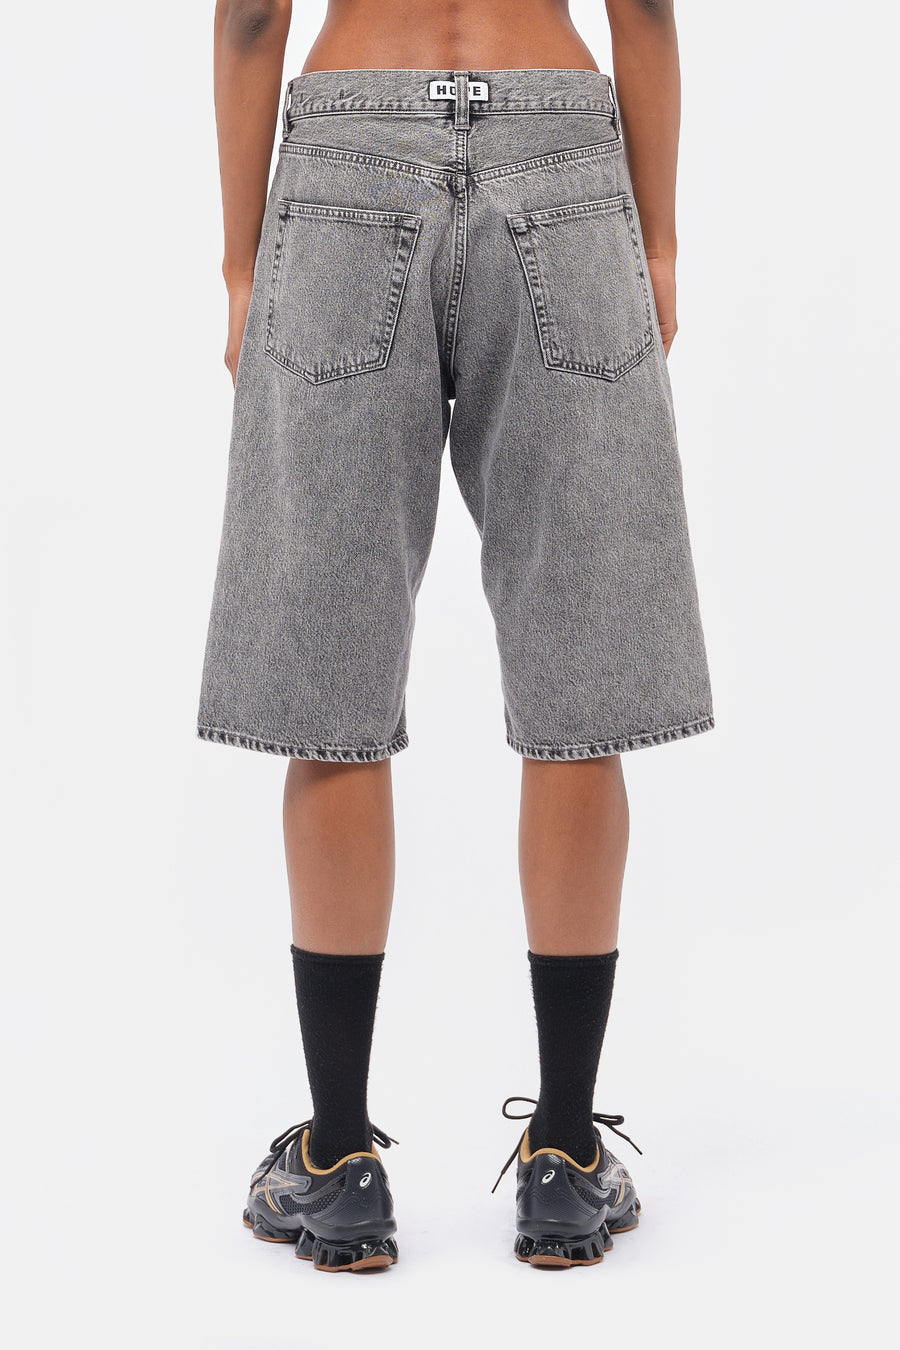 Criss Shorts in Grey